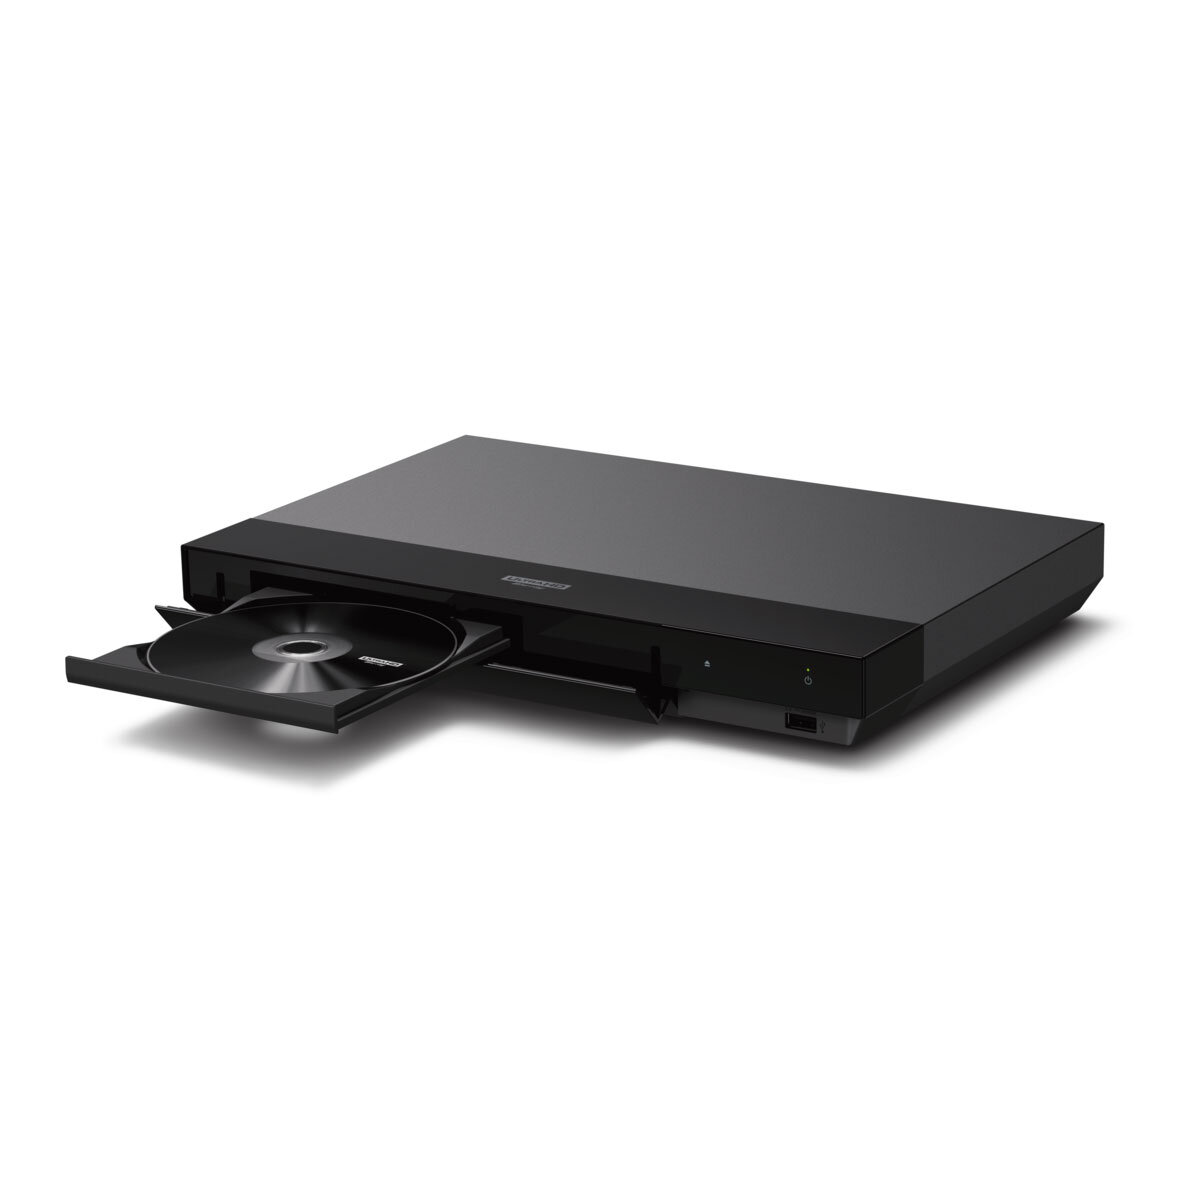 Buy Sony UBP-X700 4k Ultra HD Blu-Ray Disc Player - Black at costco.co.uk